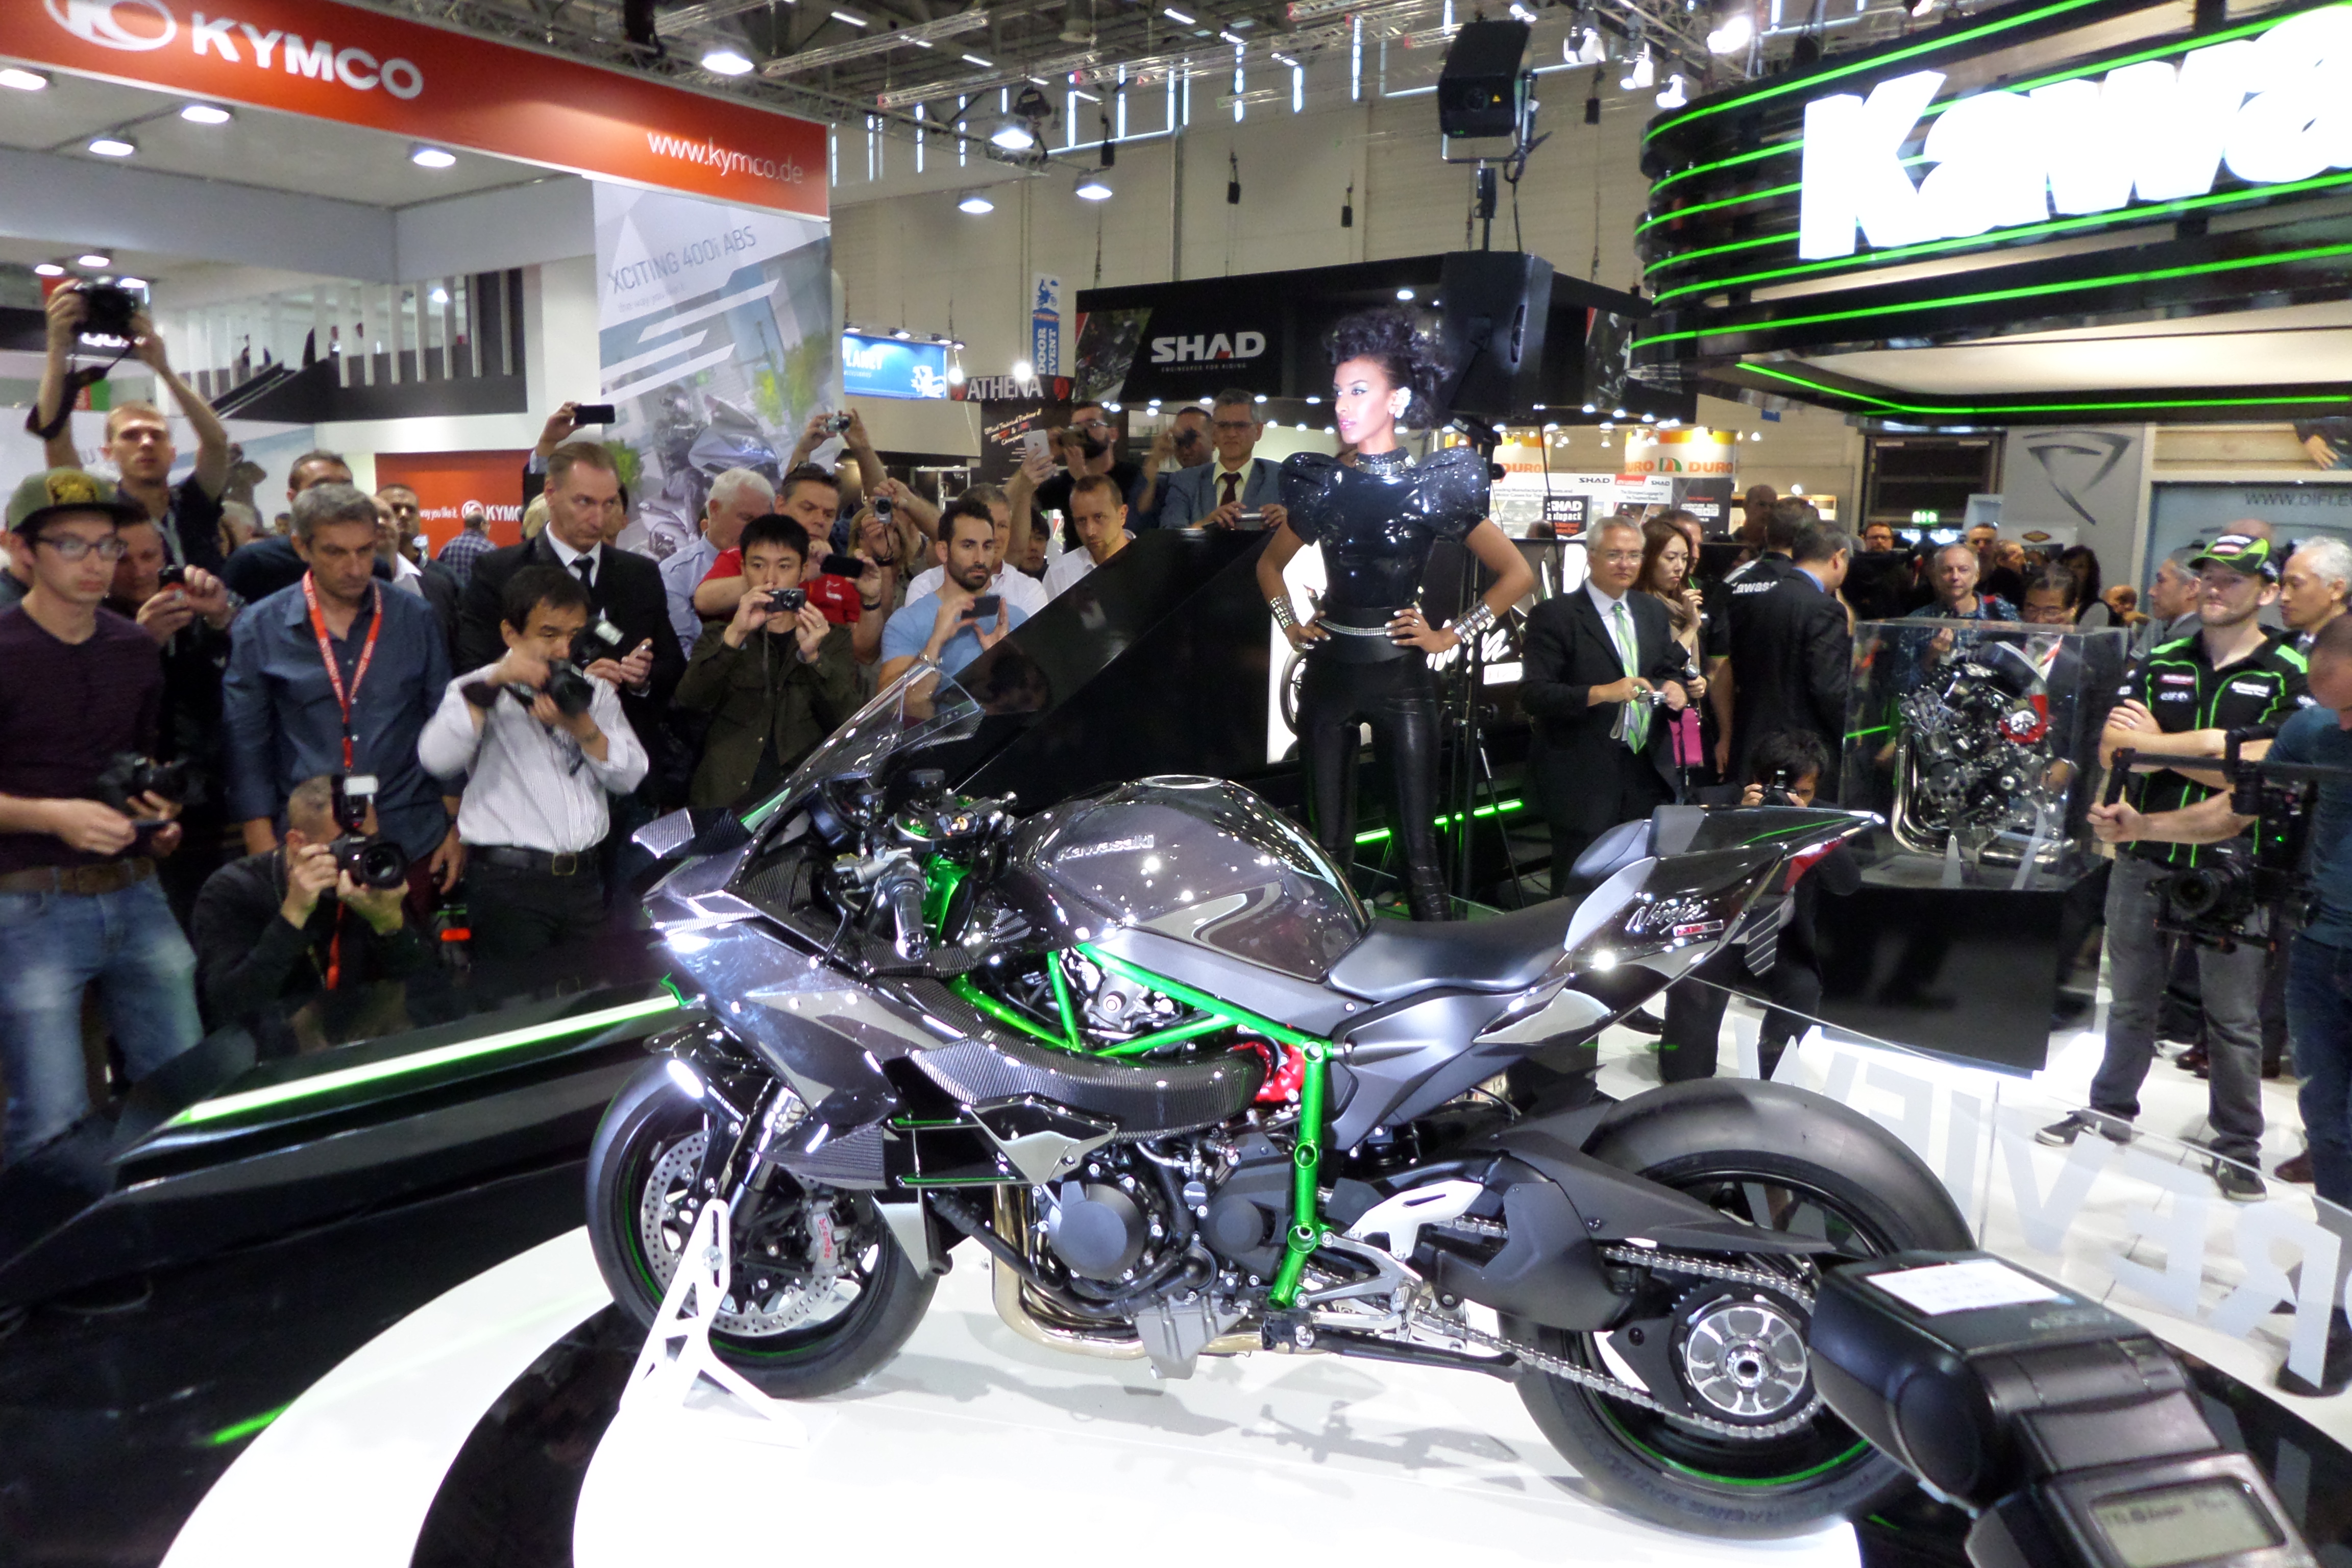 Intermot 2014: Kawasaki Ninja H2 video and uber gallery